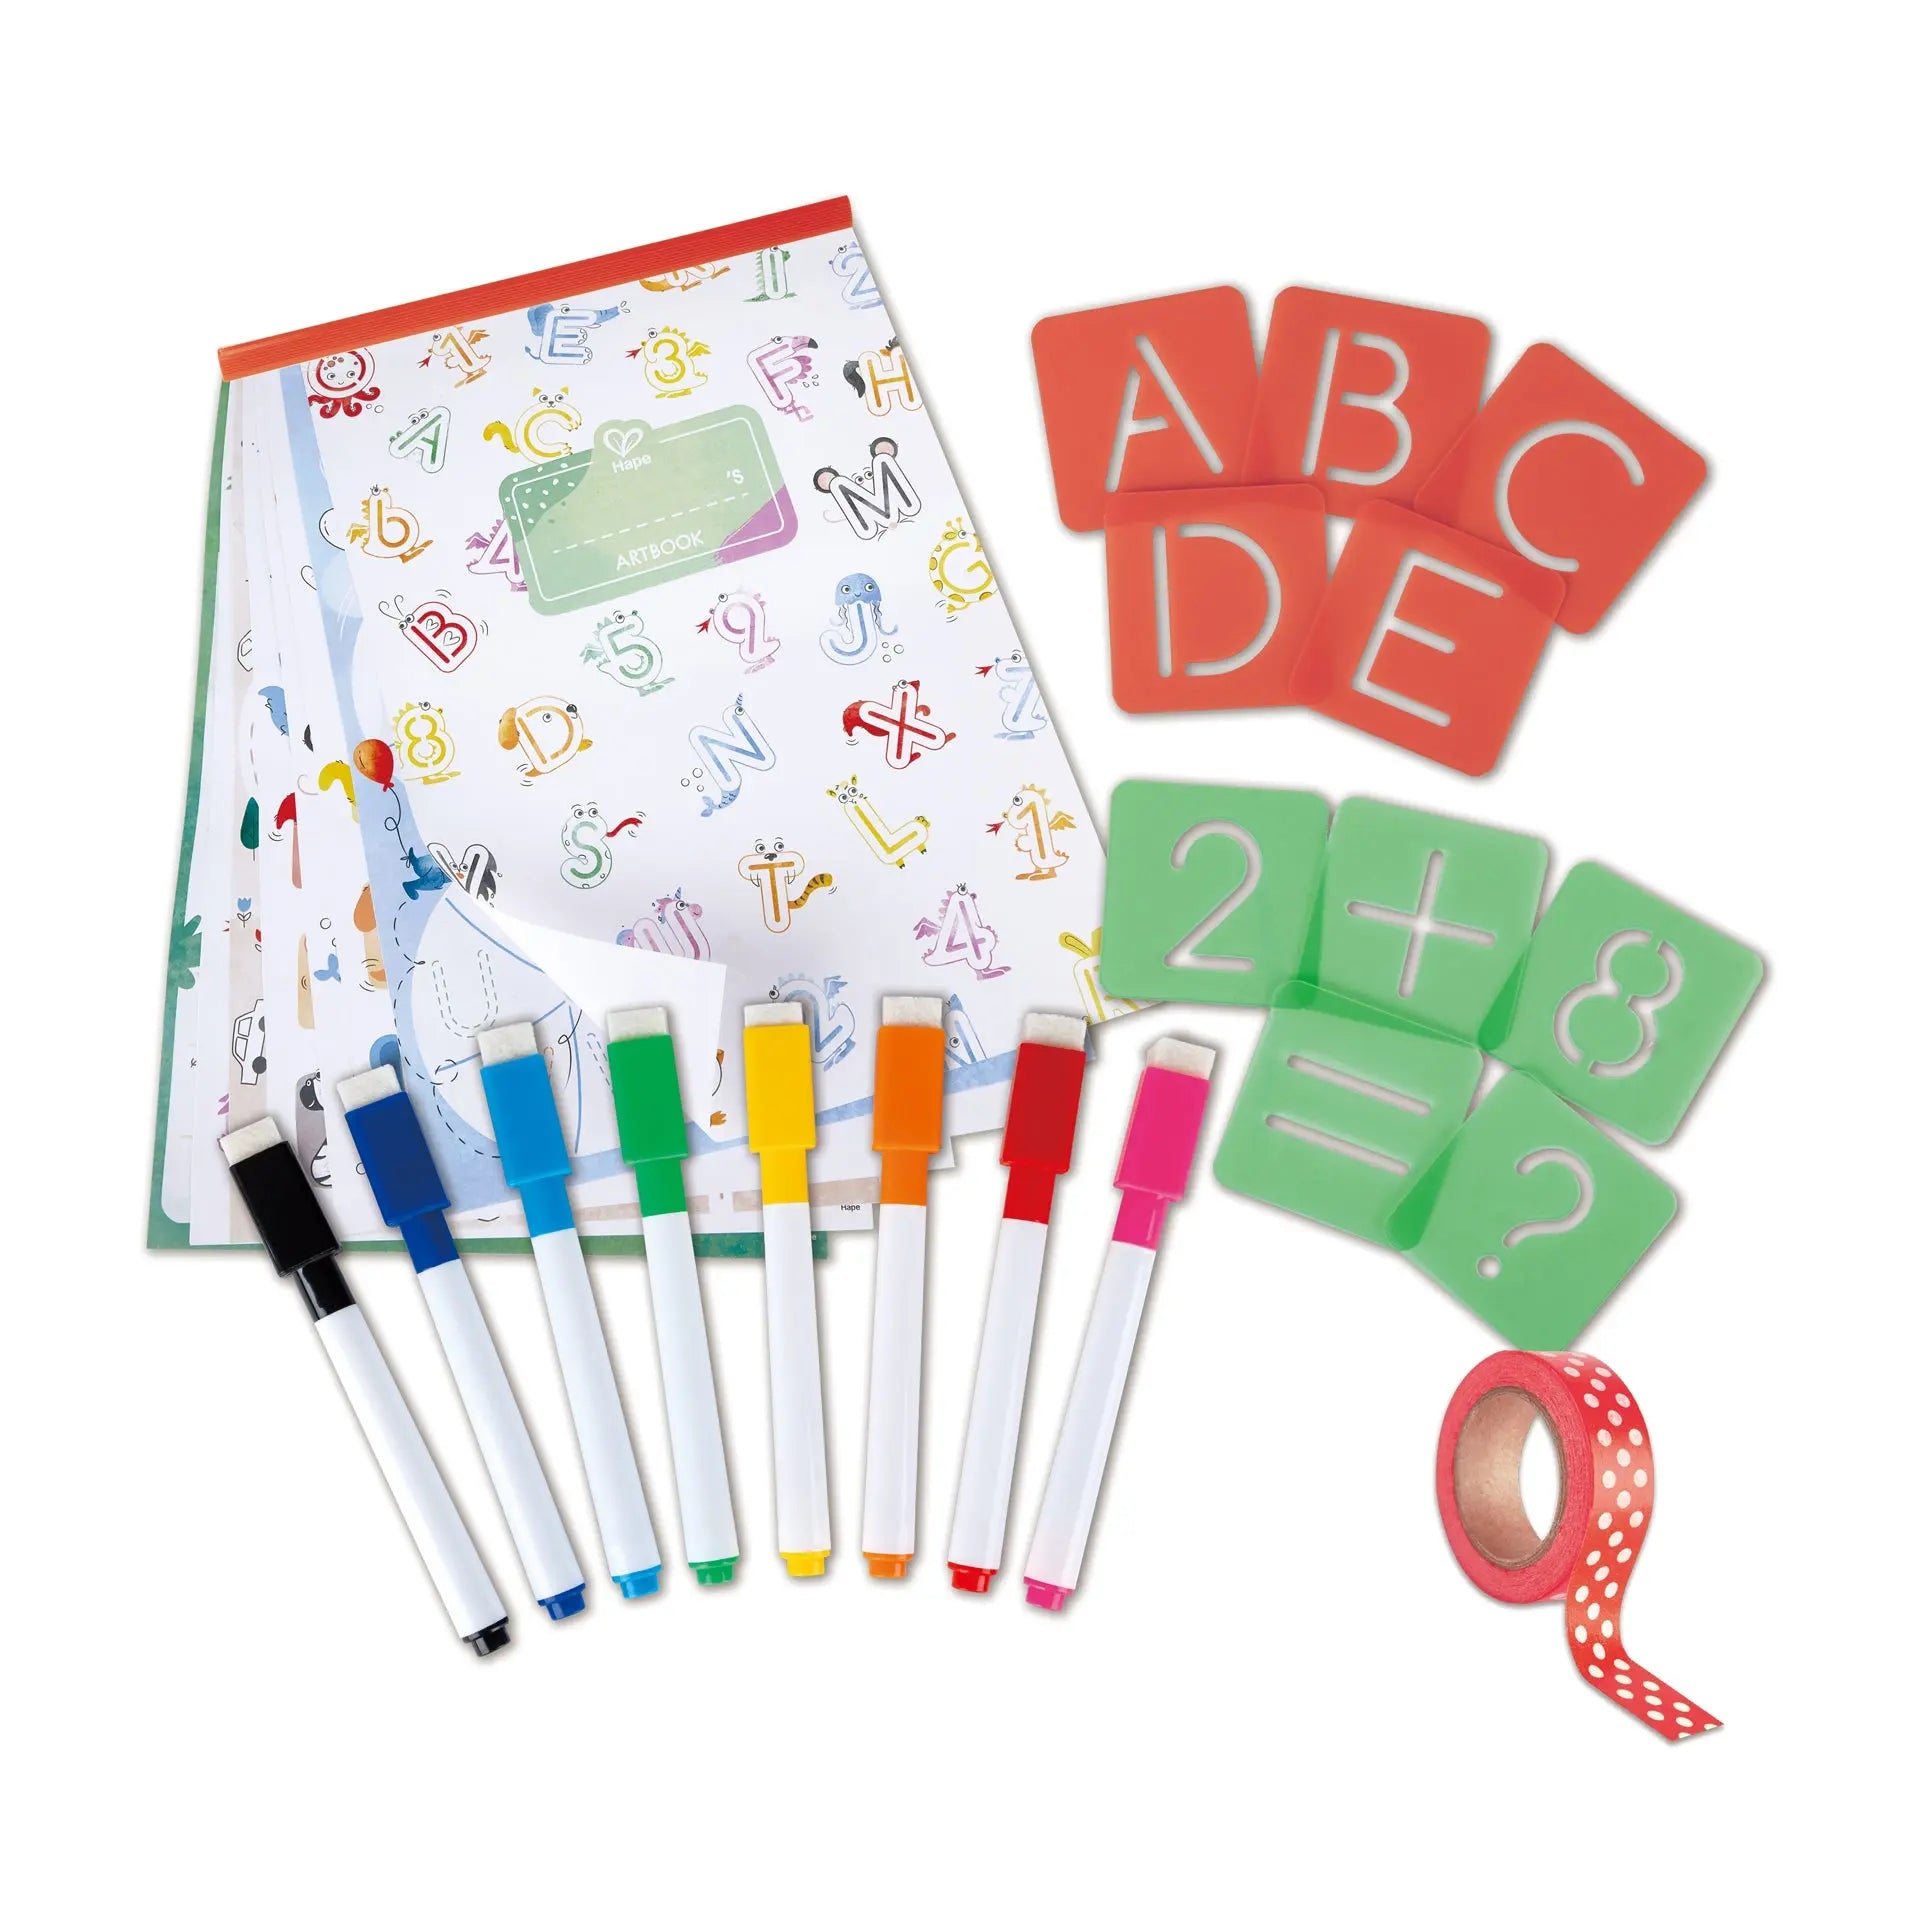 Hape Double-side Easel with Letters & Numbers Tracing Bundle Gift Set Hape Toys (Hape International Inc.)